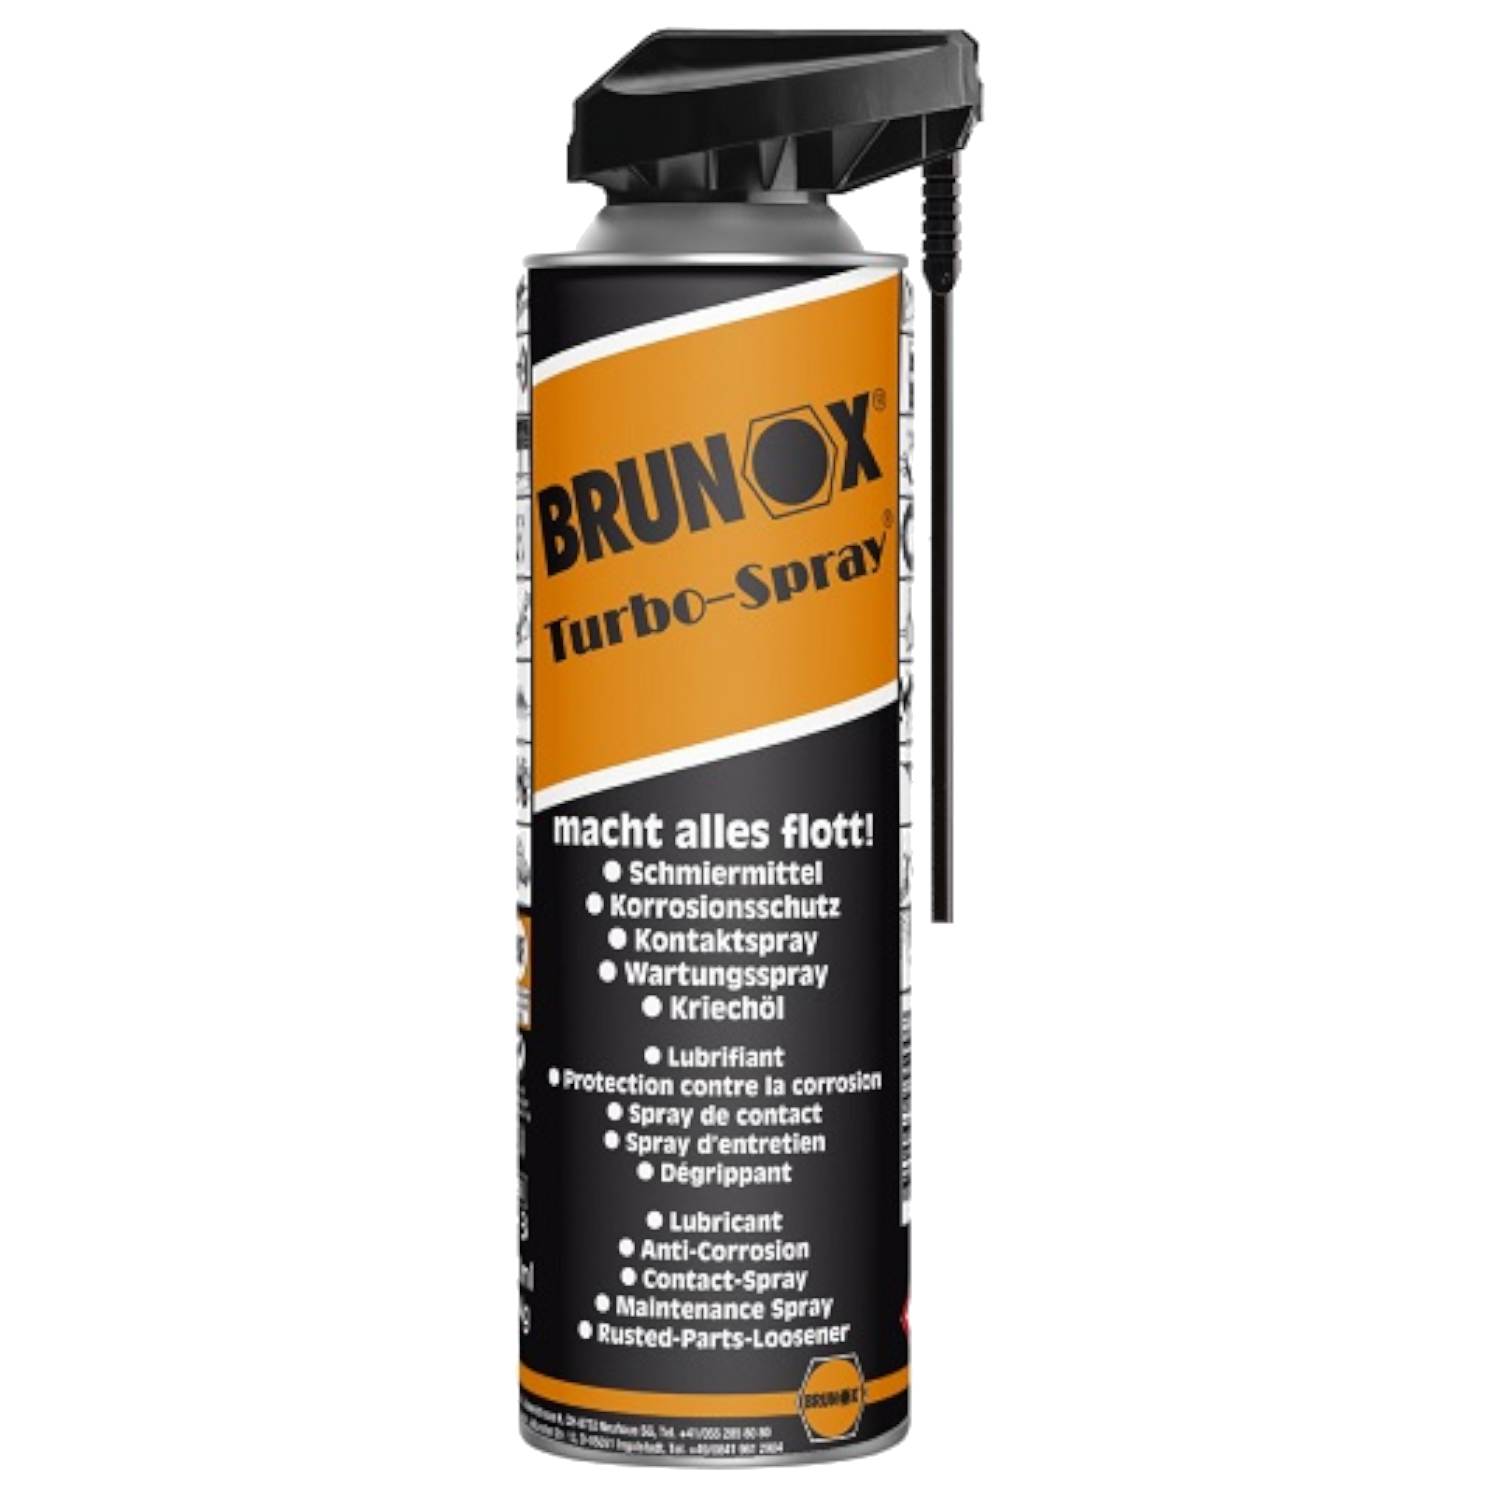 BRUNOX TURBO SPRAY POWER CLICK 500 ml Dose